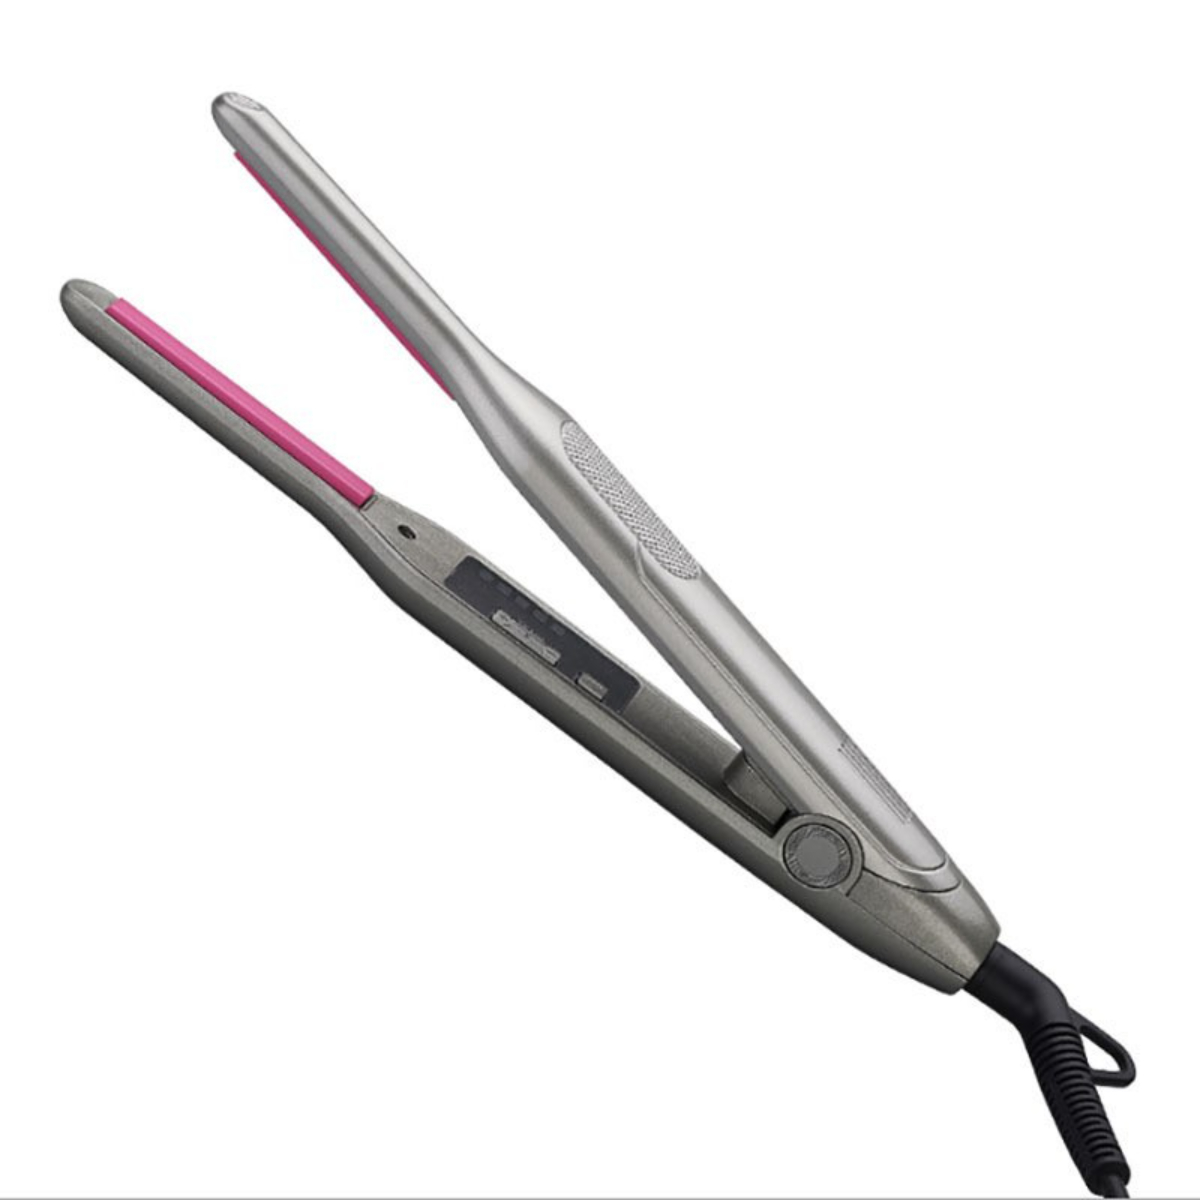 Unisex und - Gleichmäßig Haarglätter, erhitzt, 5 Graue BYTELIKE Temperaturstufen: Mini-Haarglättungsplatte glätten locken,